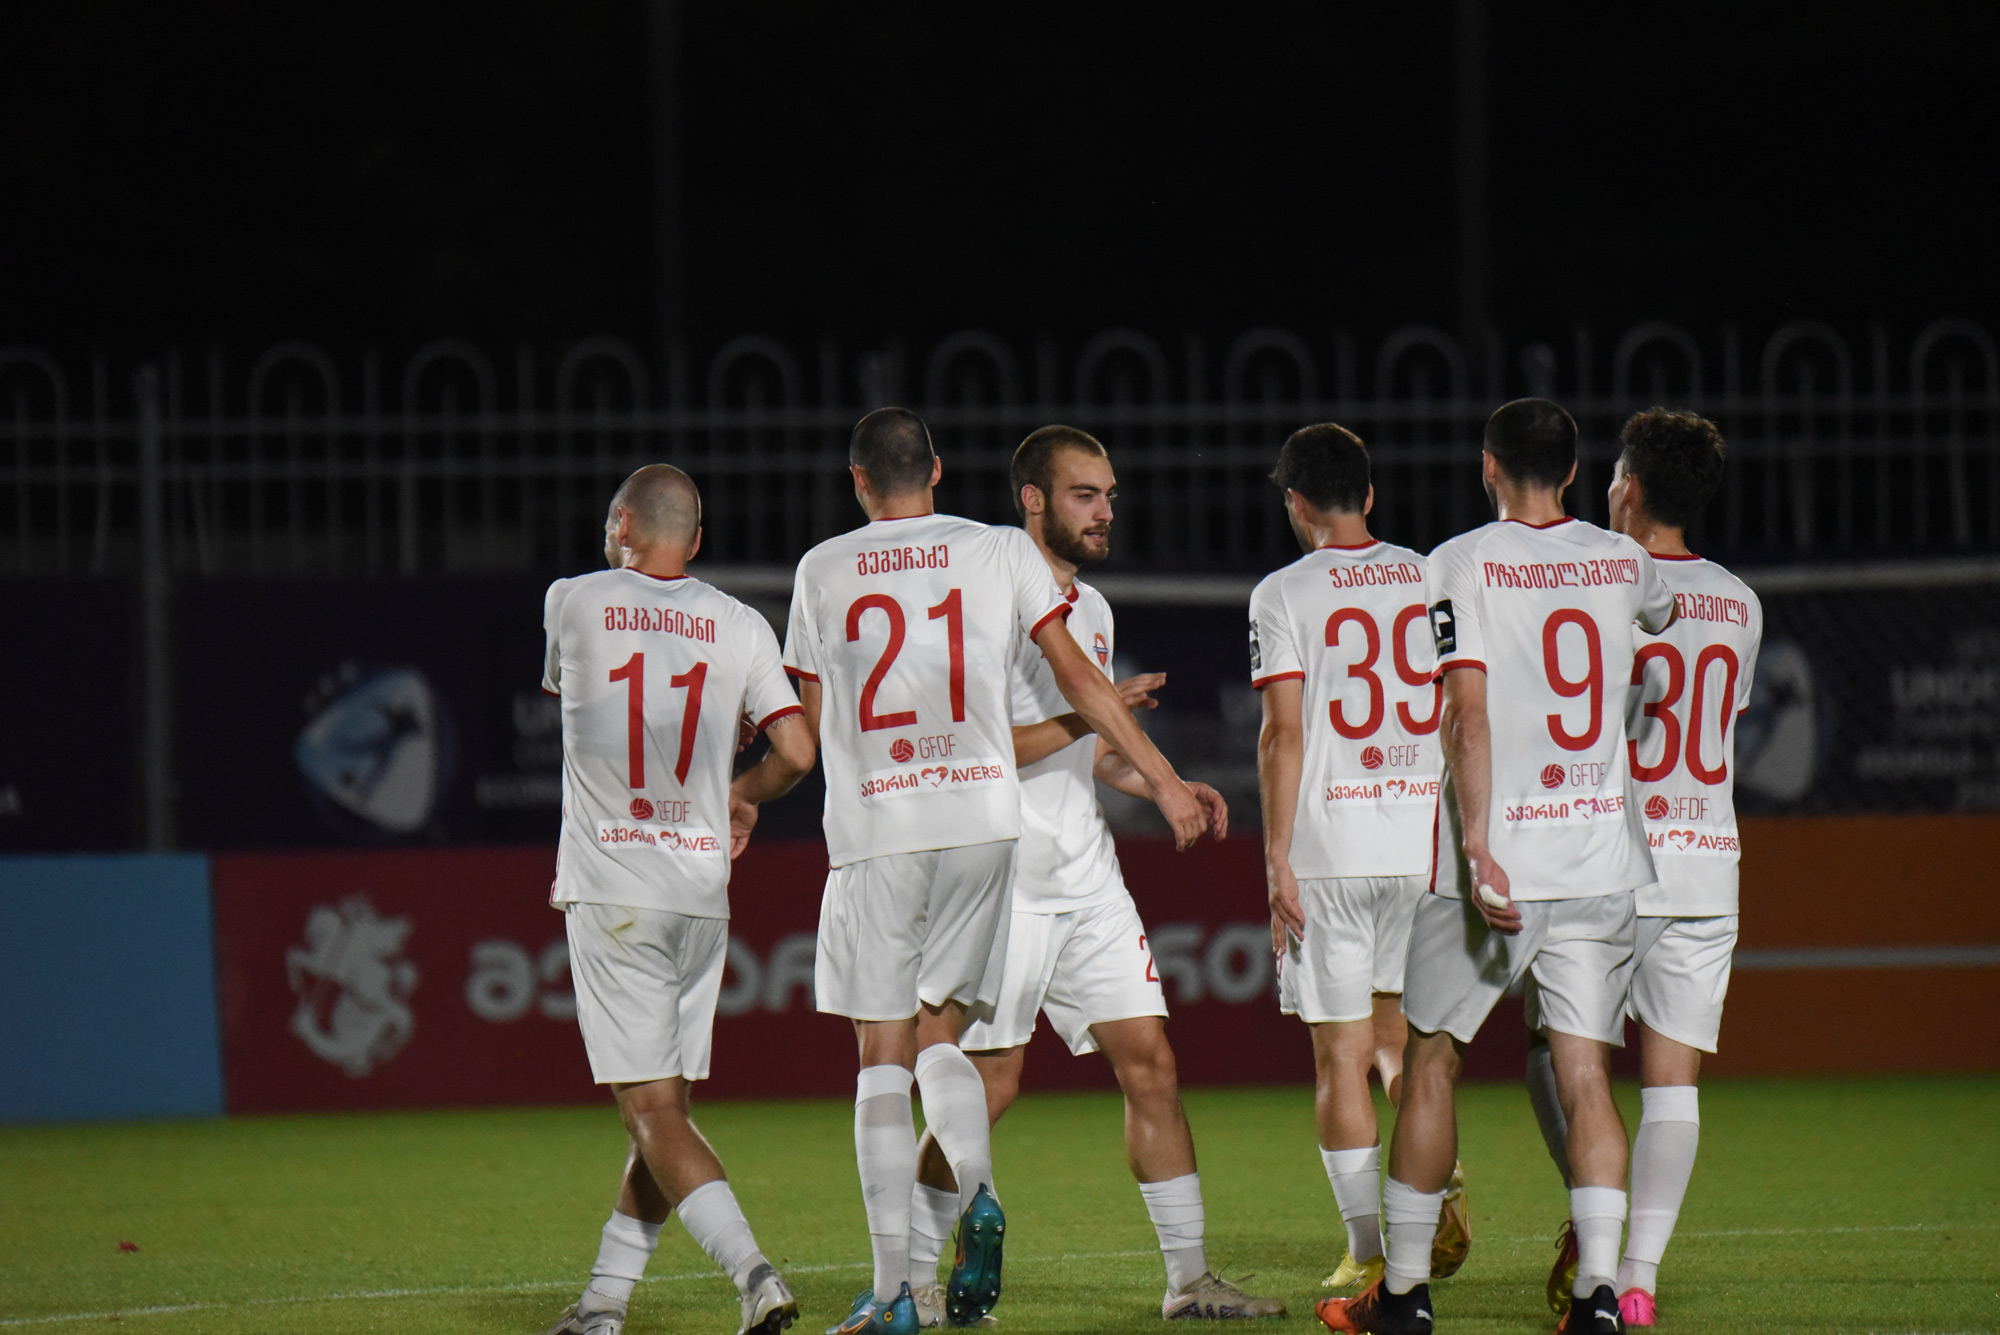 FC Locomotive scored 5 goals against Martvili Merani